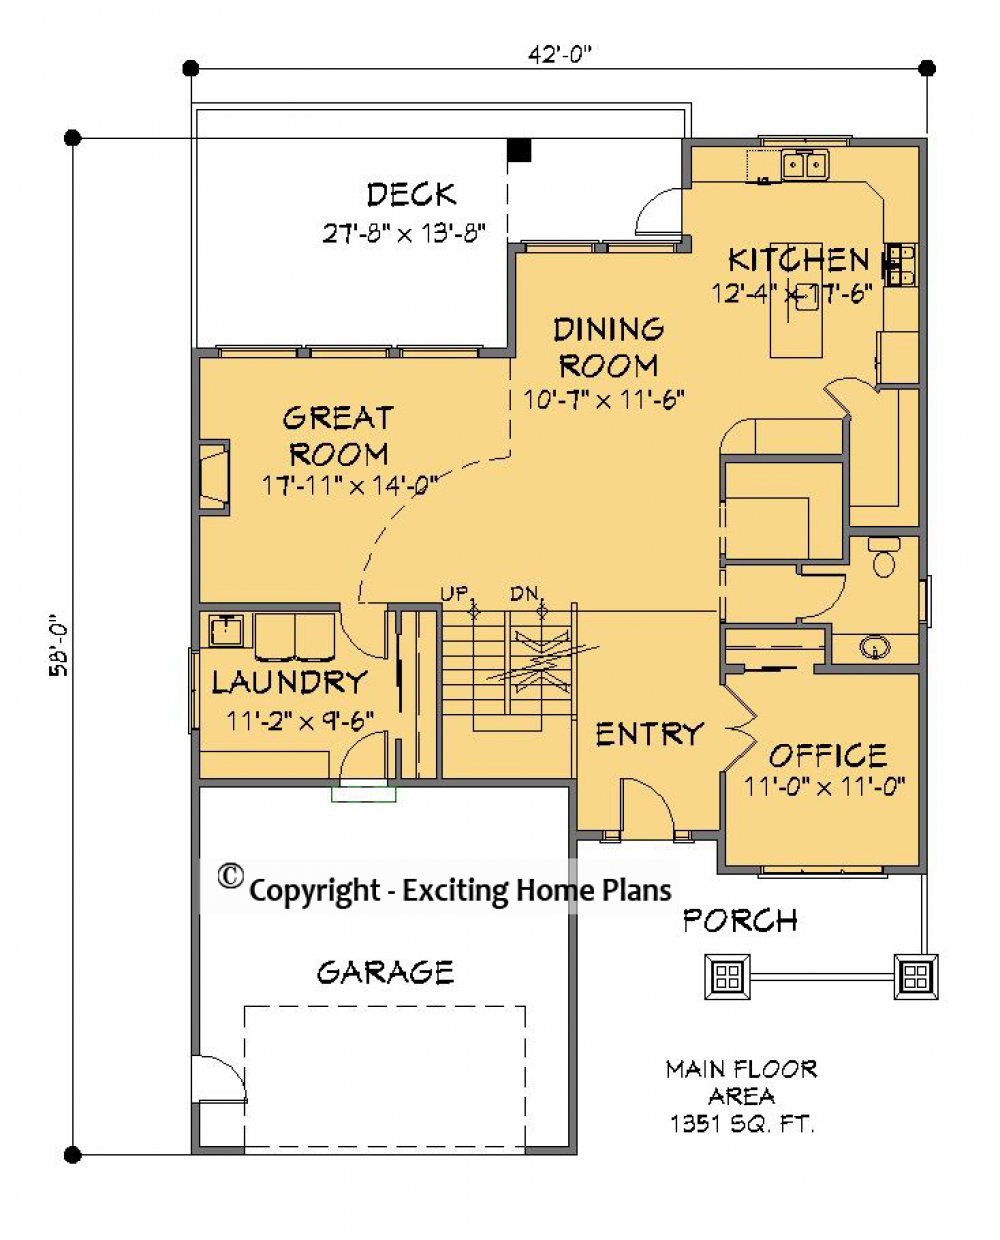 House Plan E1198-13  Main Floor Plan